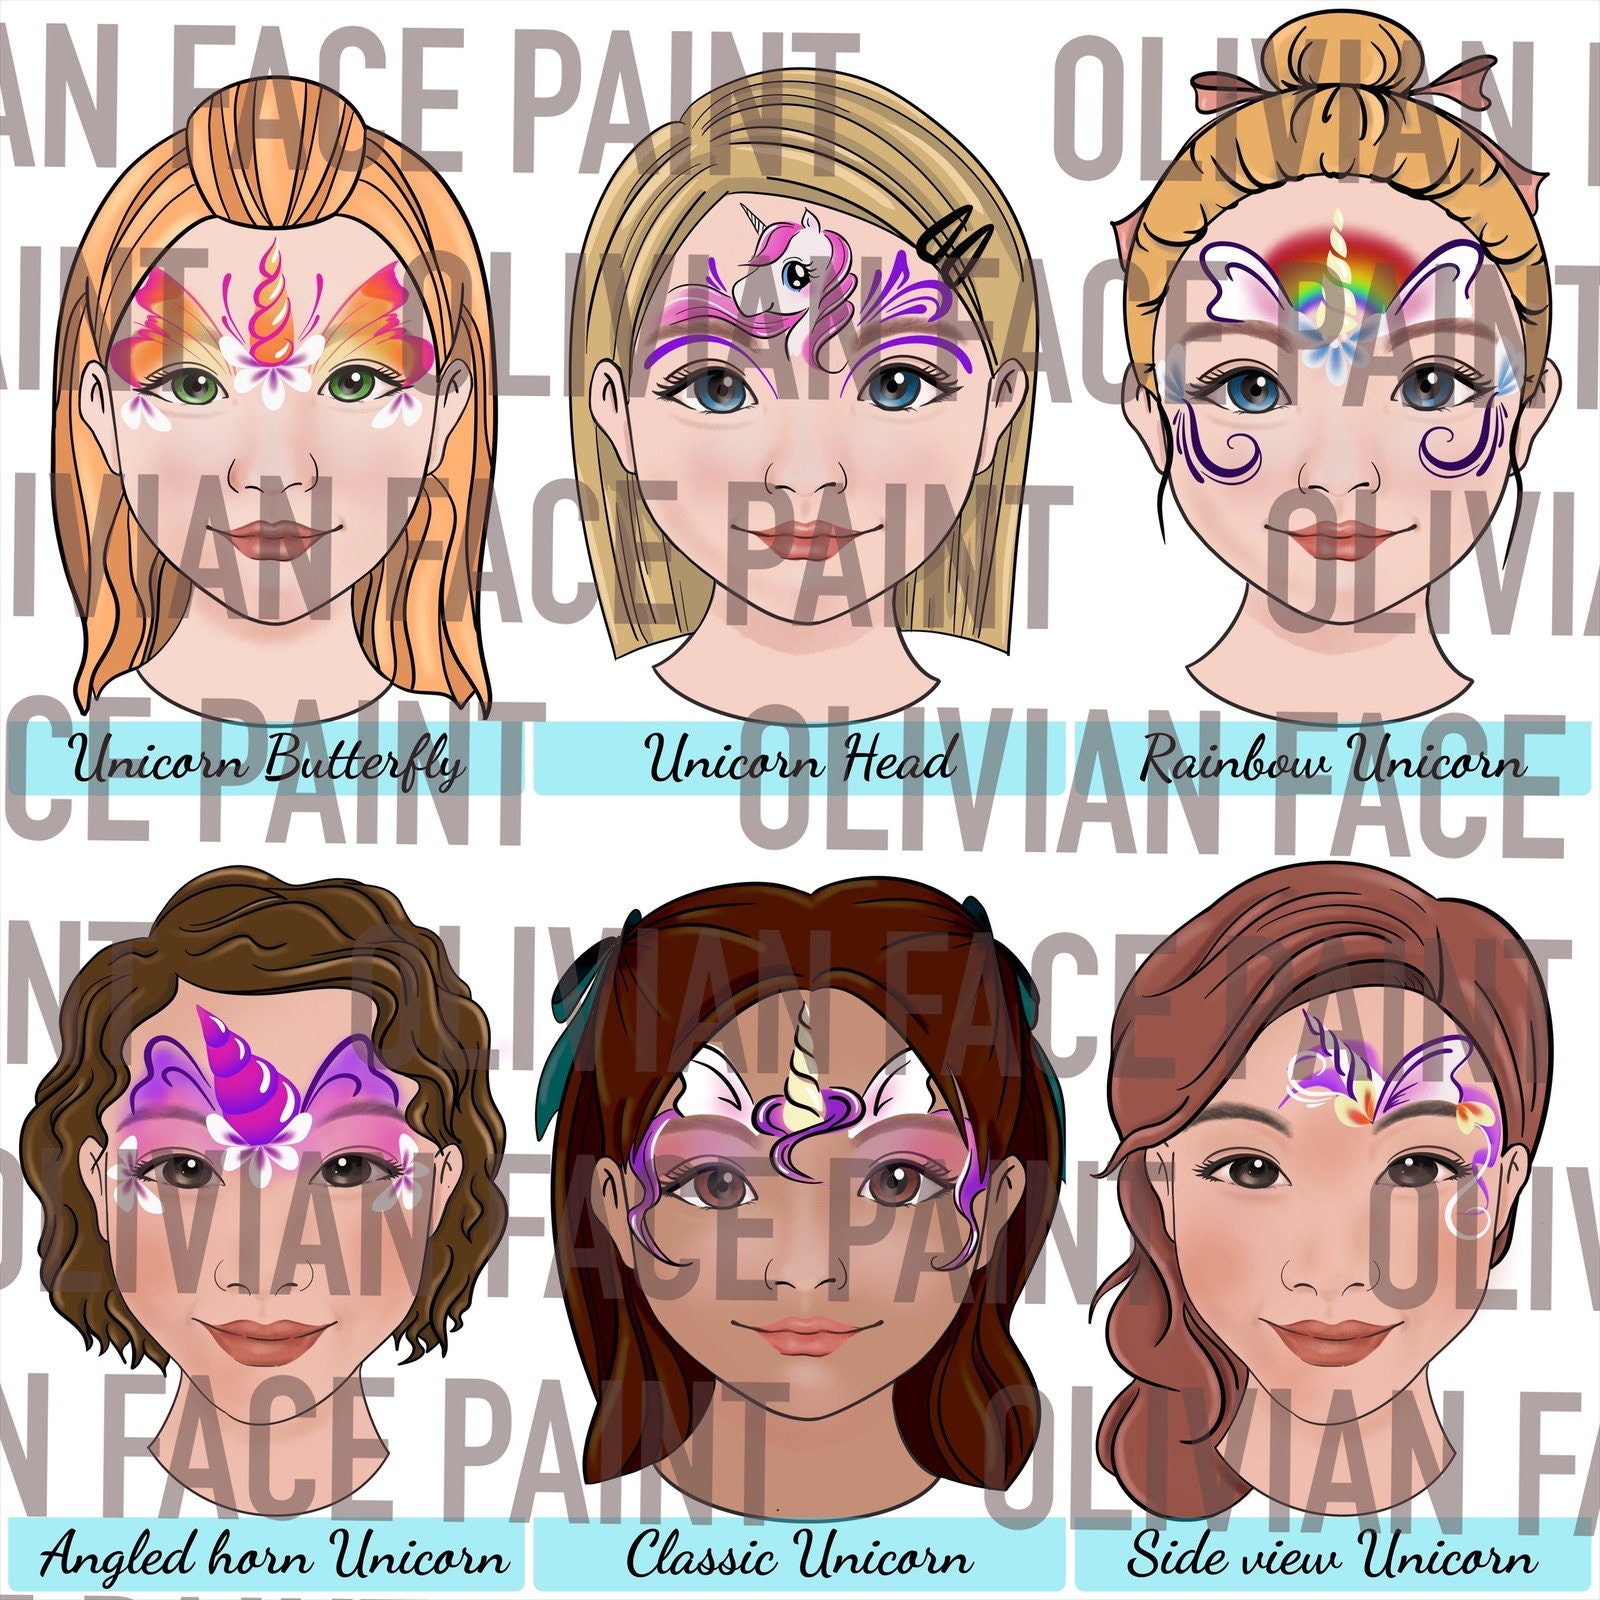 GirlZone Unicorn and Jewels Face Painting Kit, Amazing Face Paint Set with Face Gems, Brushes, Face Paint Stencils and A Kids Face Paint Lookbook to C